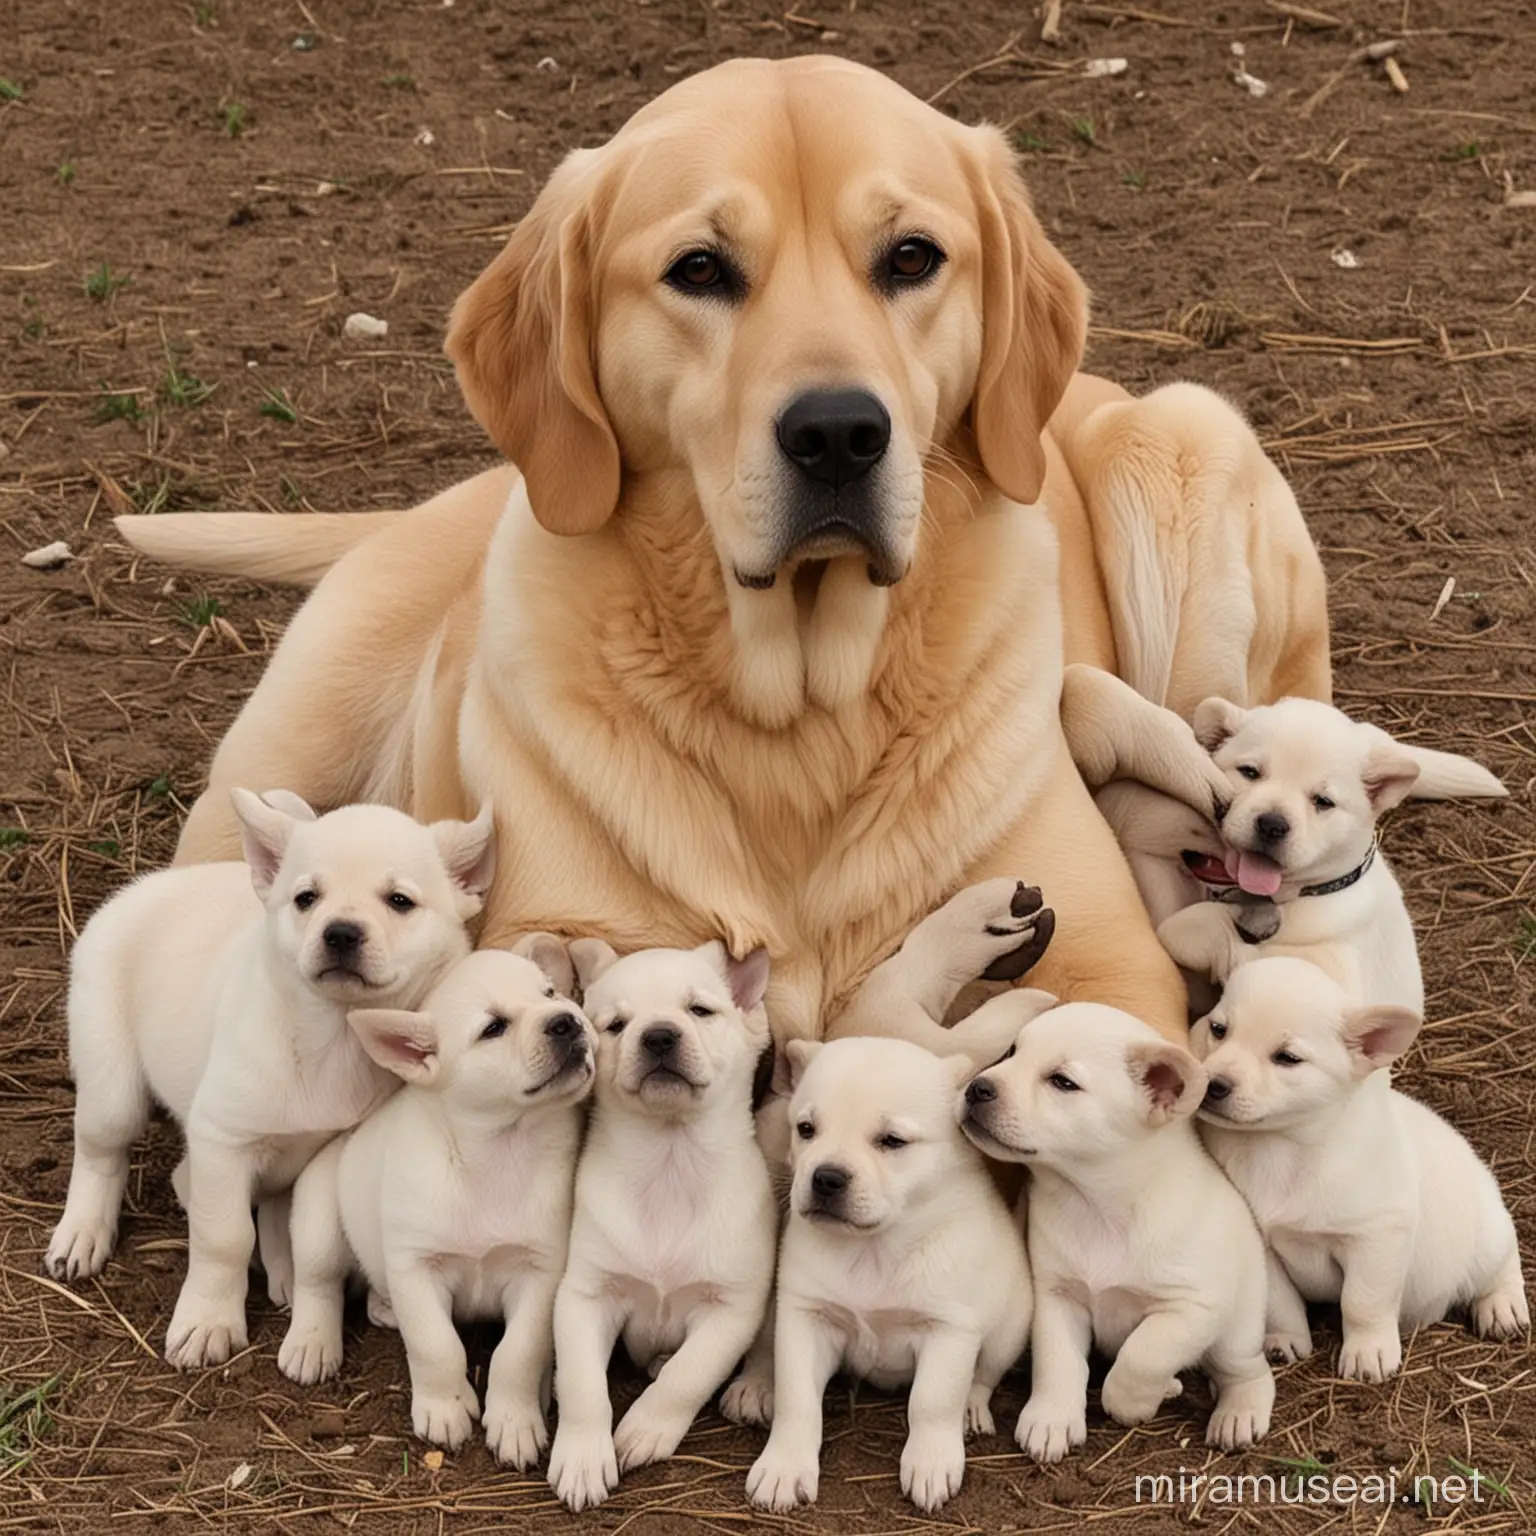 Divine Mother with Her Adorable Puppies Heartwarming Scene of Nurturing Love